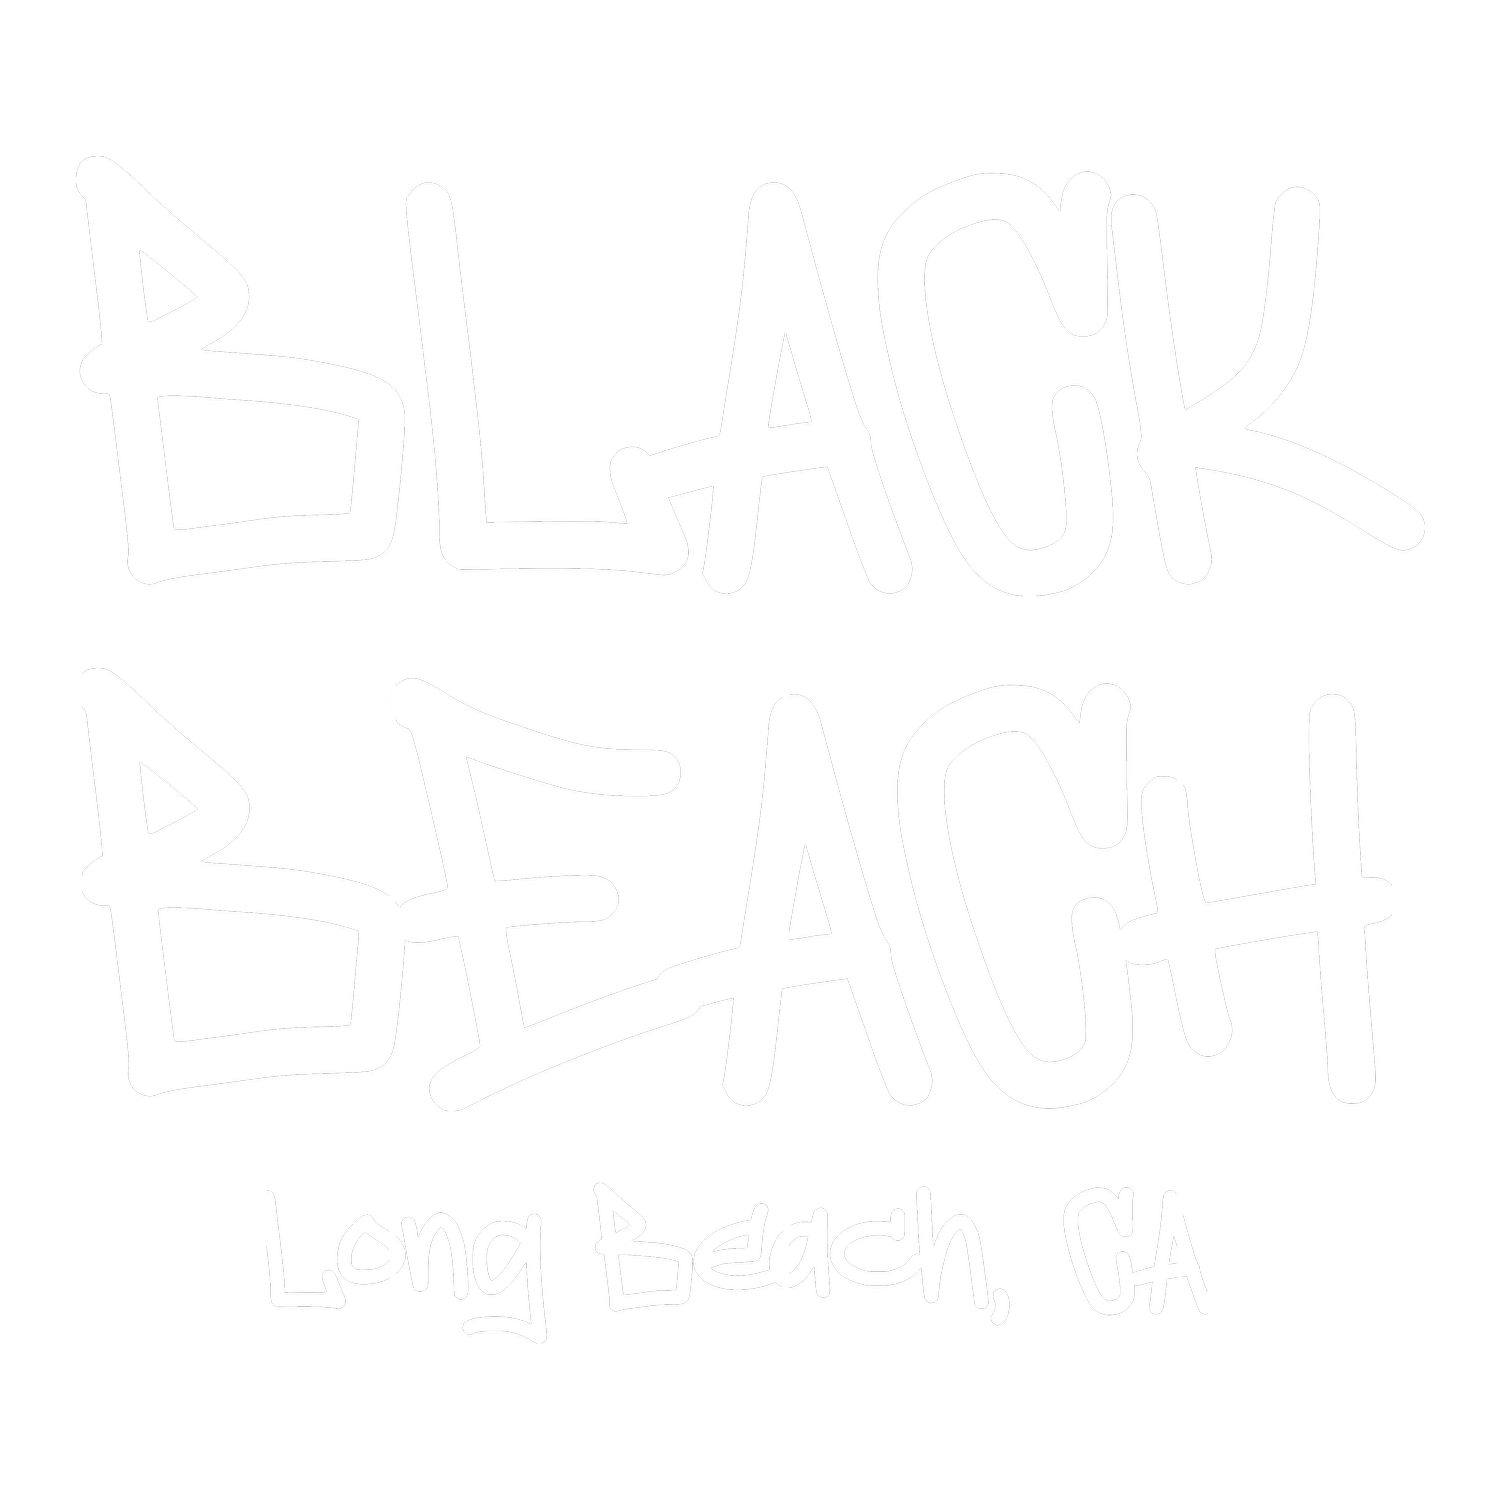 Black Beach 